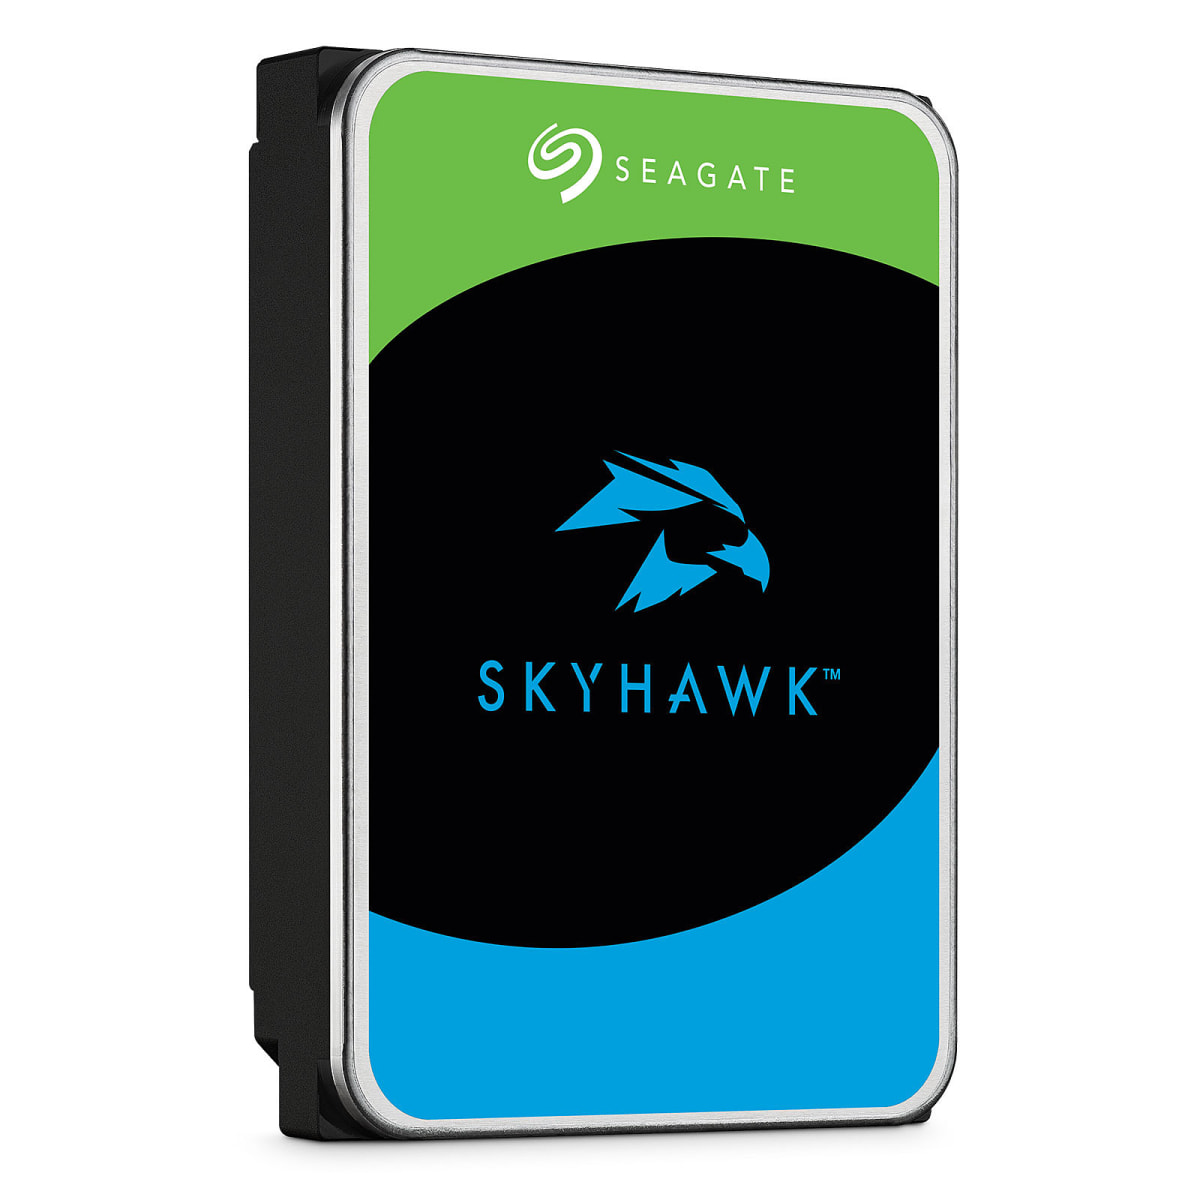 SKYHAWK SEAGATE HDD, intern 6TB, 3,5 Zoll, GB, ST6000VX001 6000